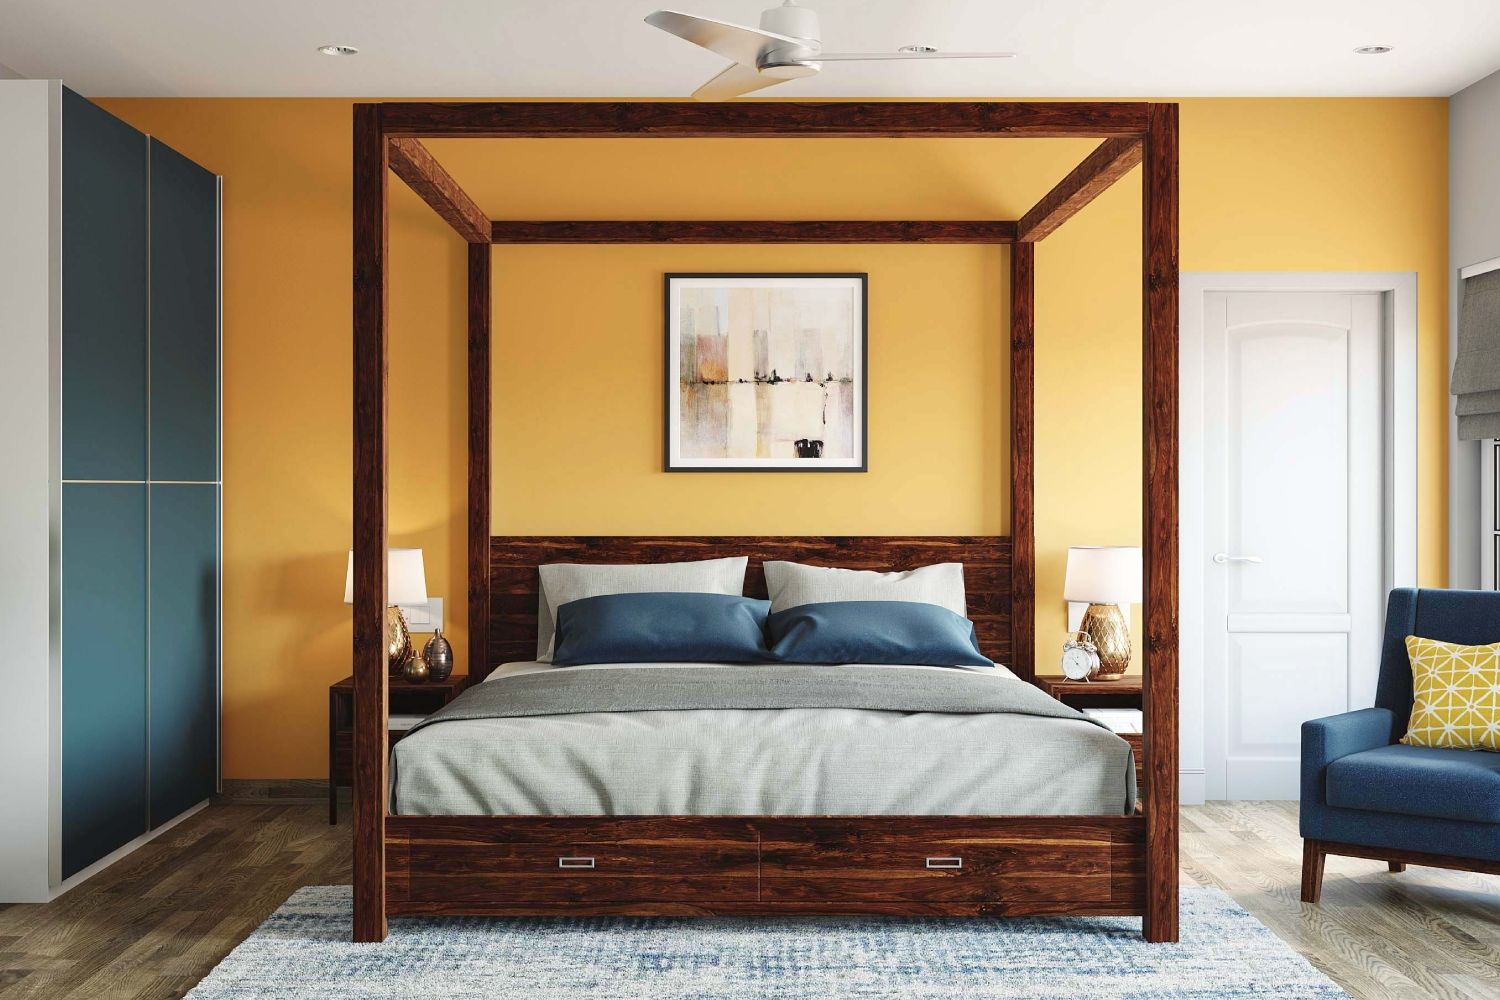 Modern Golden Yellow Bedroom Wallpaint Design